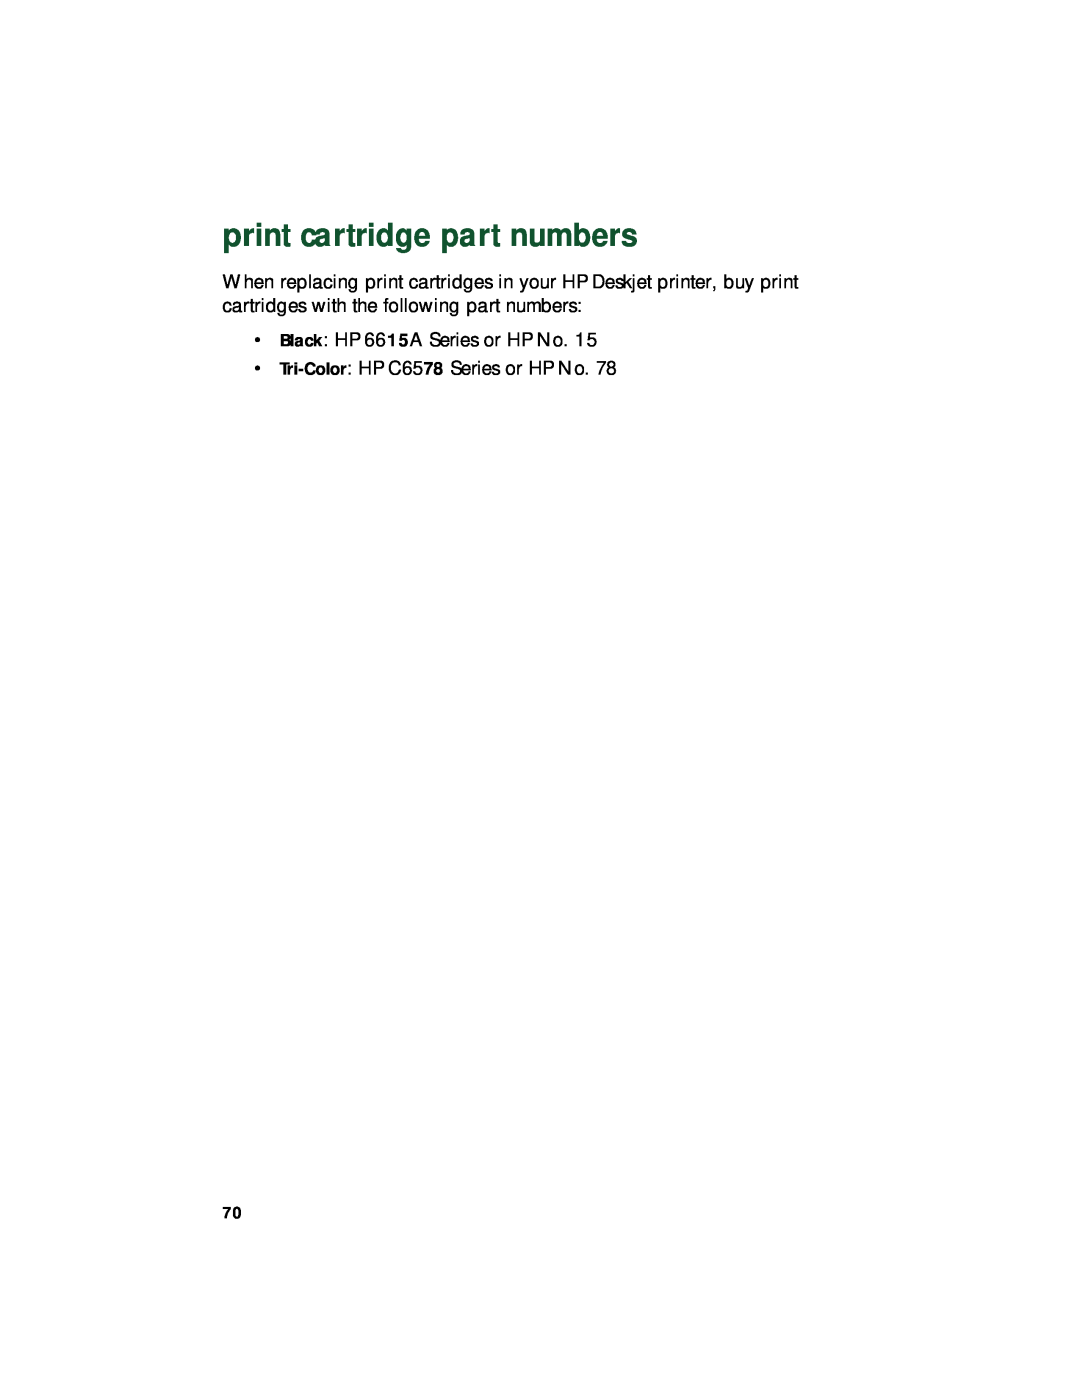 HP 920c, 948c, 940c manual print cartridge part numbers, Black HP 6615A Series or HP No Tri-Color HP C6578 Series or HP No 